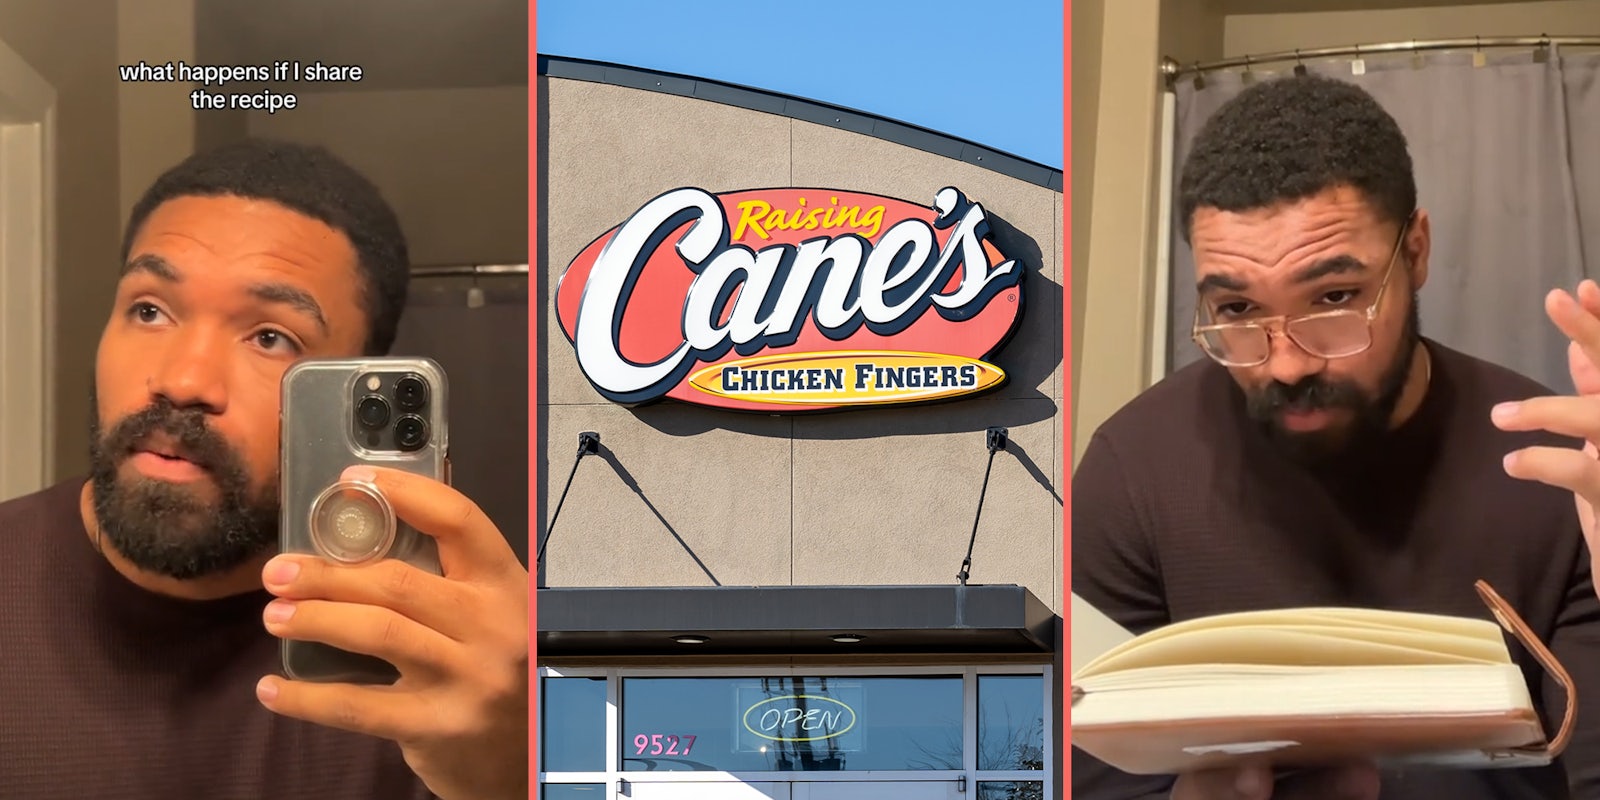 Fast food expert reveals Raising Cane's secret sauce recipe